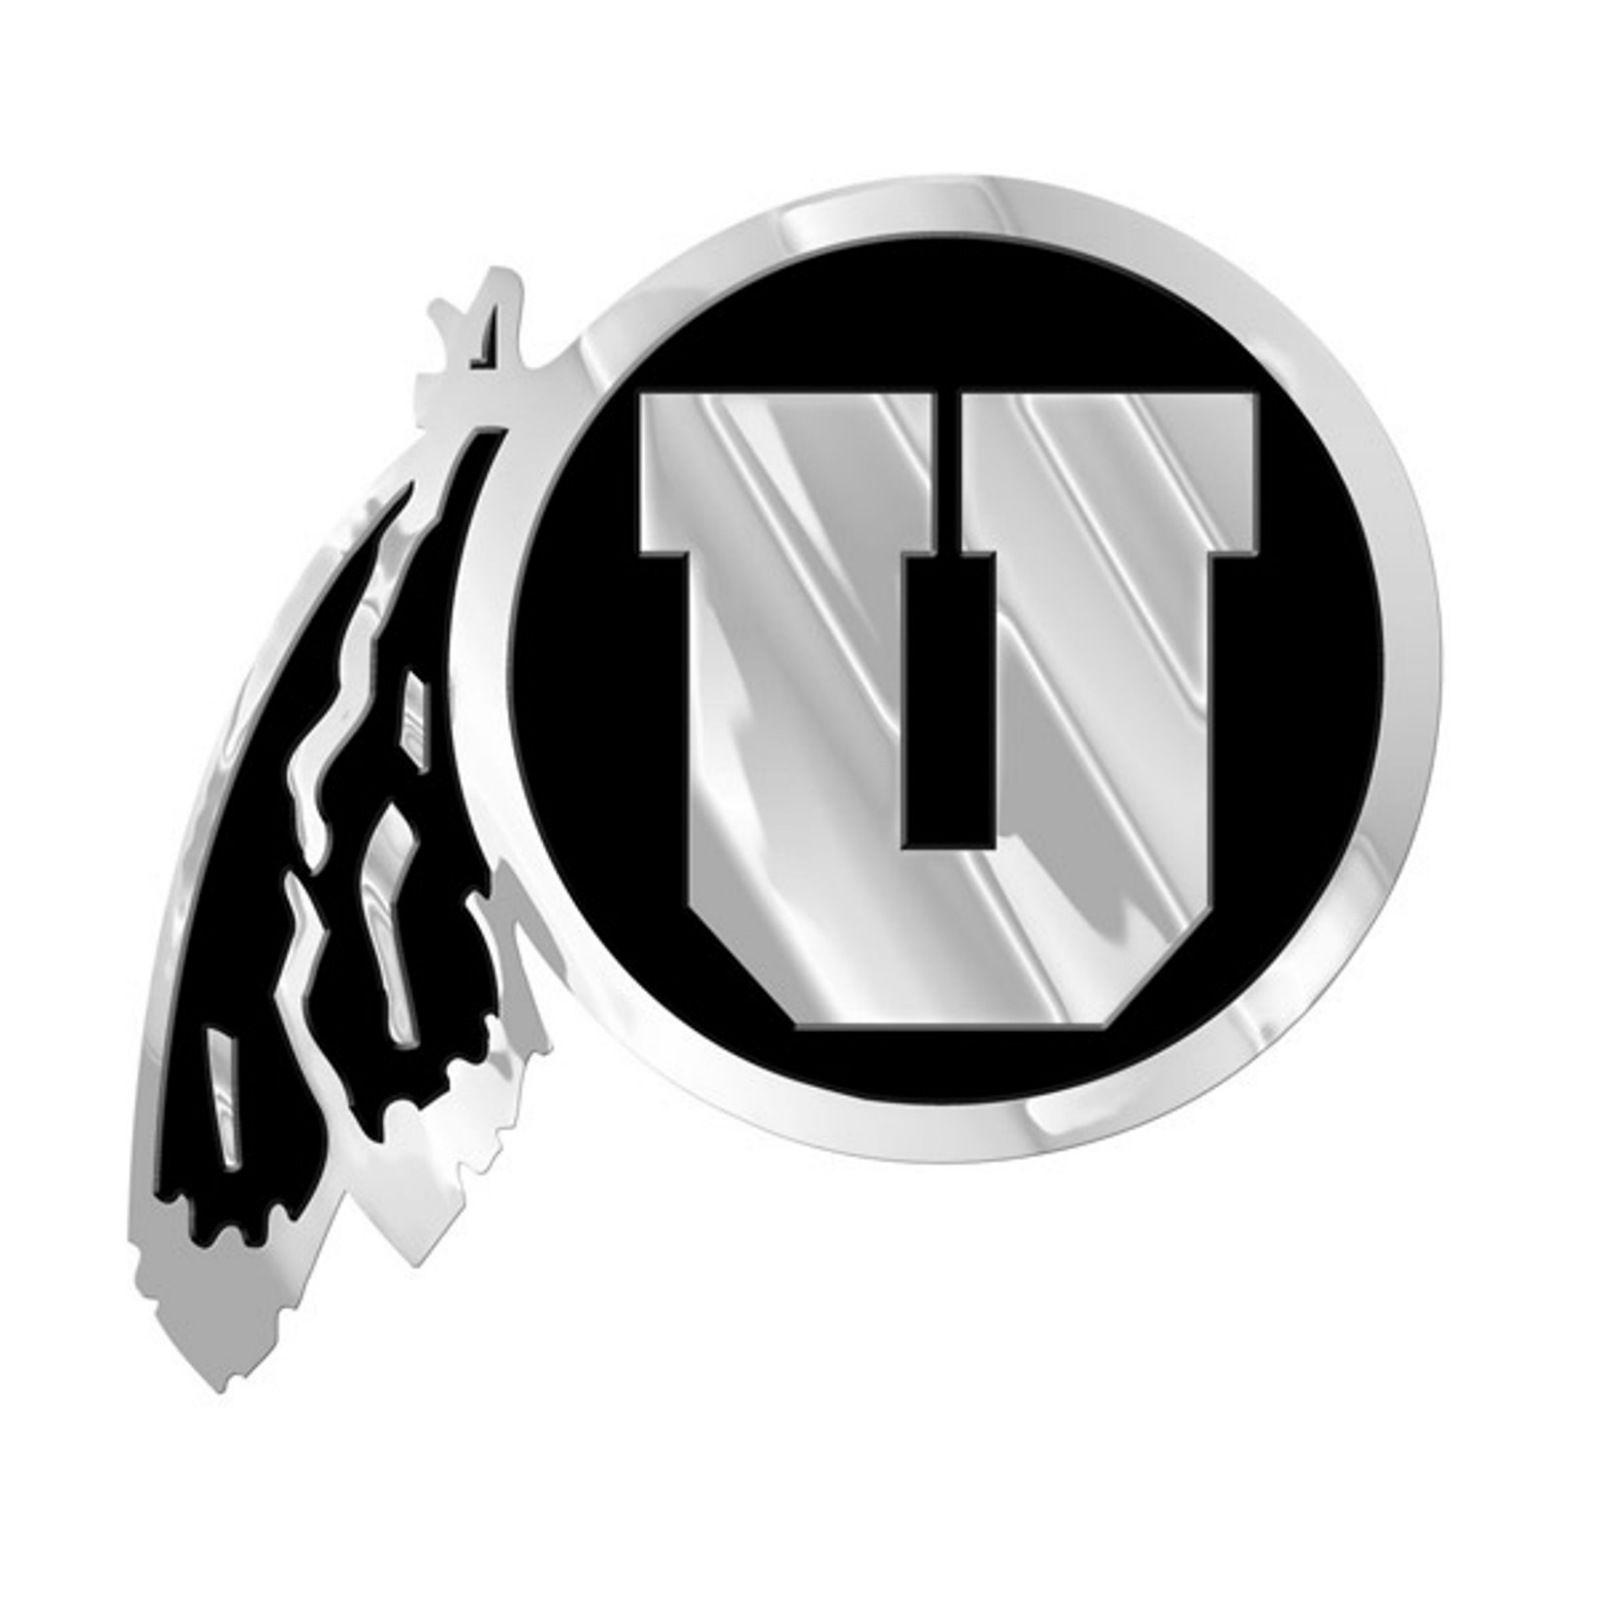 University of Utah Football Logo - Utah Utes Silver Chrome Colored Raised Die Cut Auto Emblem Decal